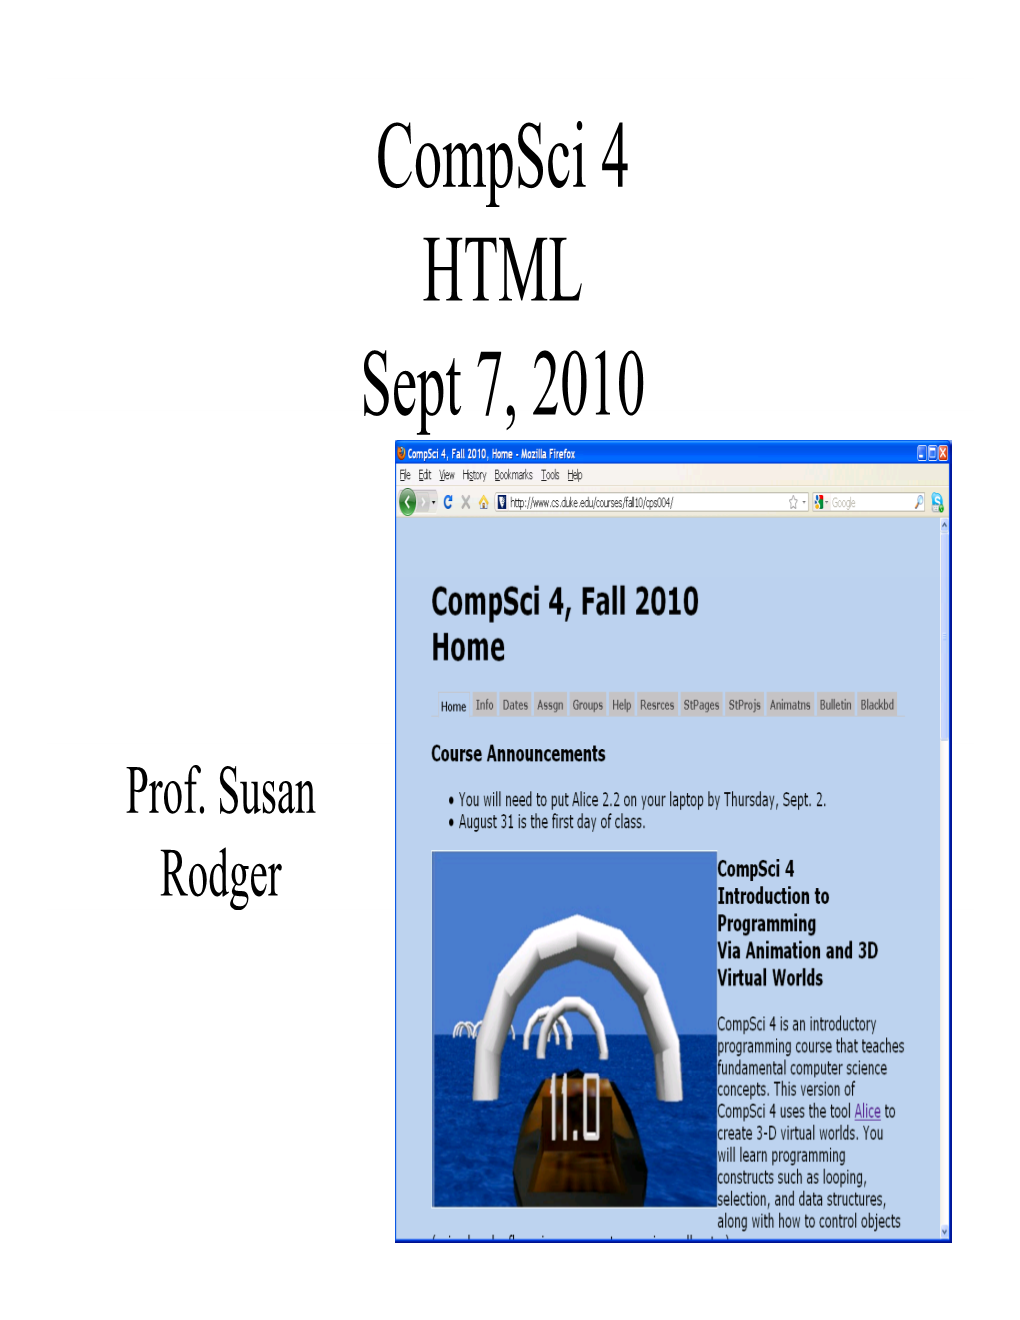 Compsci 4 HTML Sept 7, 2010